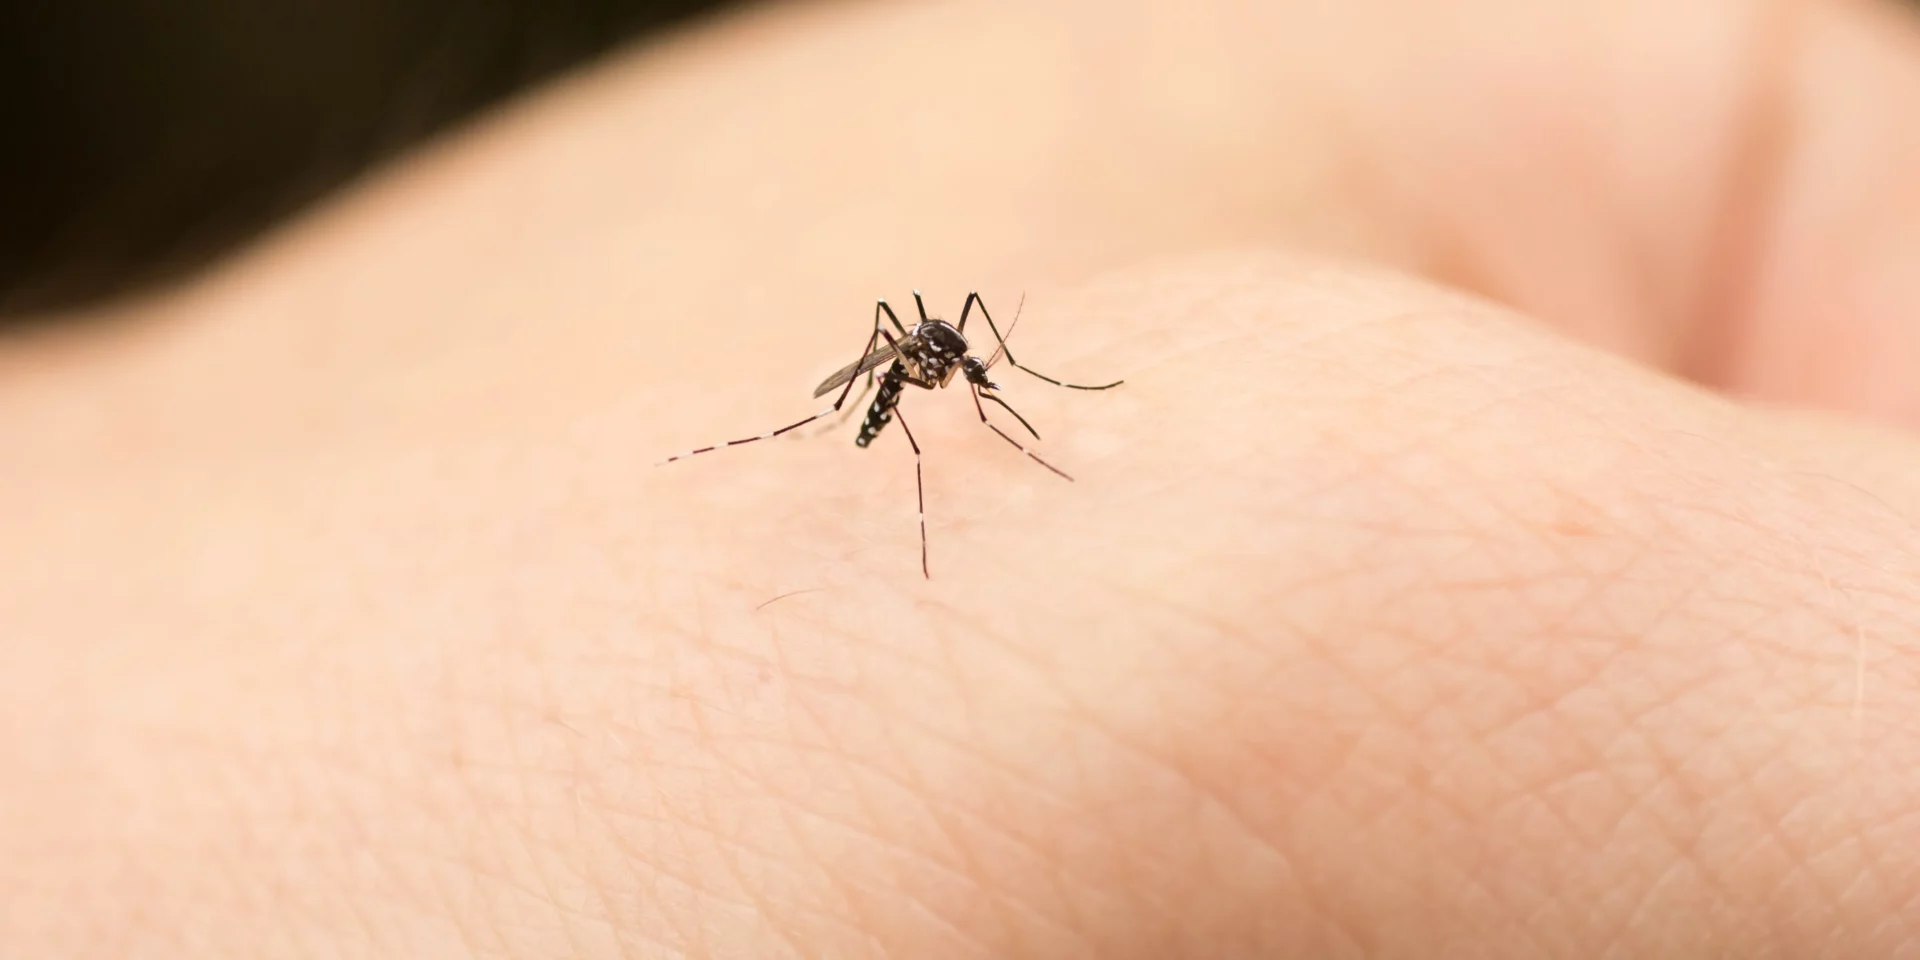 mosquito bite allergy